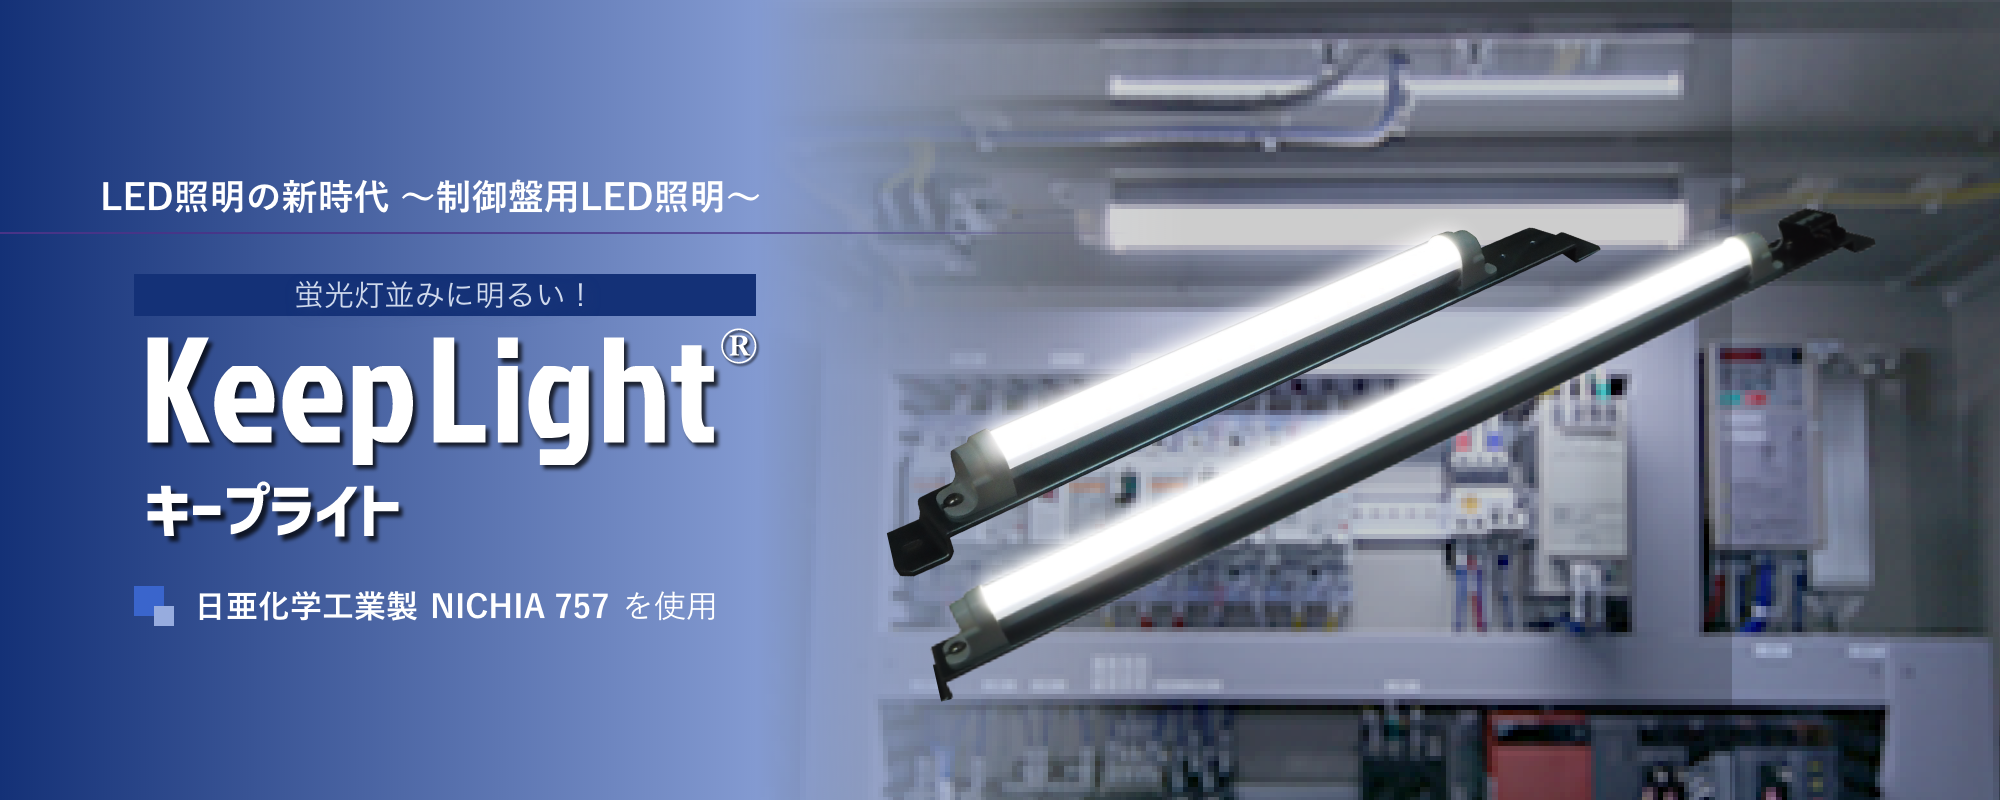 LED照明の新時代 〜制御盤用LED照明〜 蛍光灯並みに明るい！「KeepLight(キープライト)」